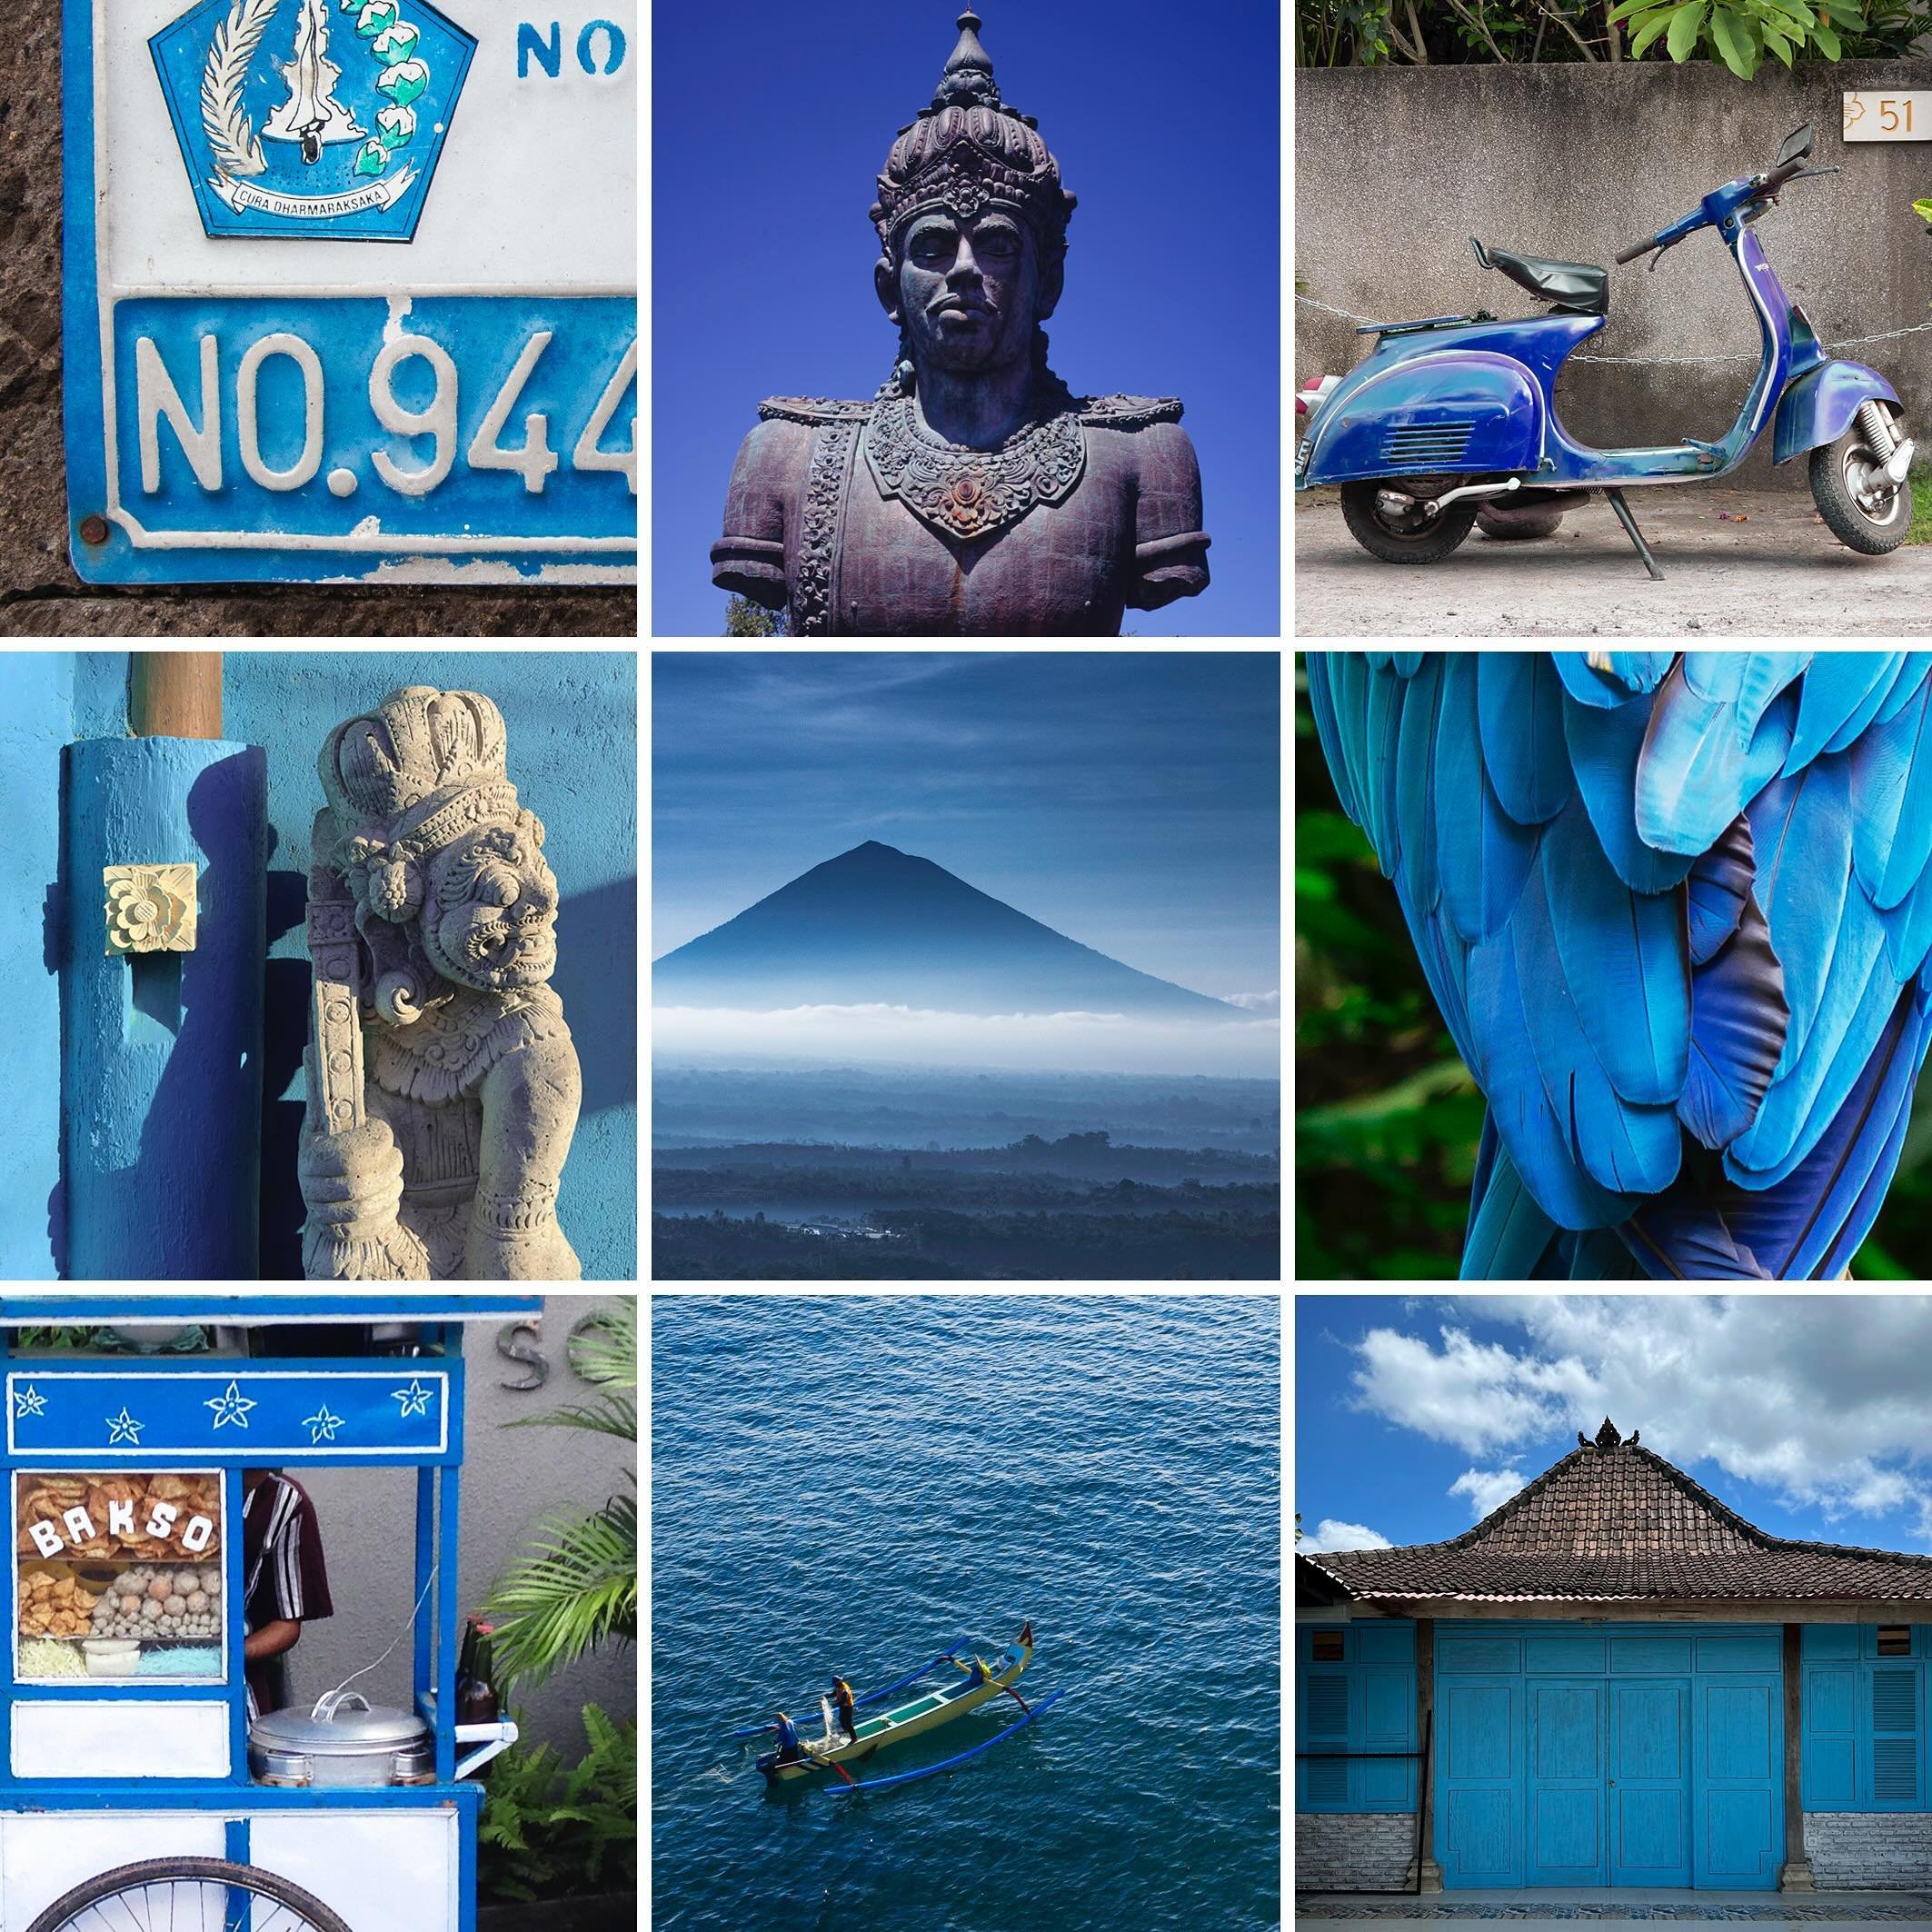 Blue Bali. #bali #blue #bluetheme #balilife #balivilla #umalas #coloursofbali #visitbali #discoverindonesia #baliholiday #tropical #exoticbali